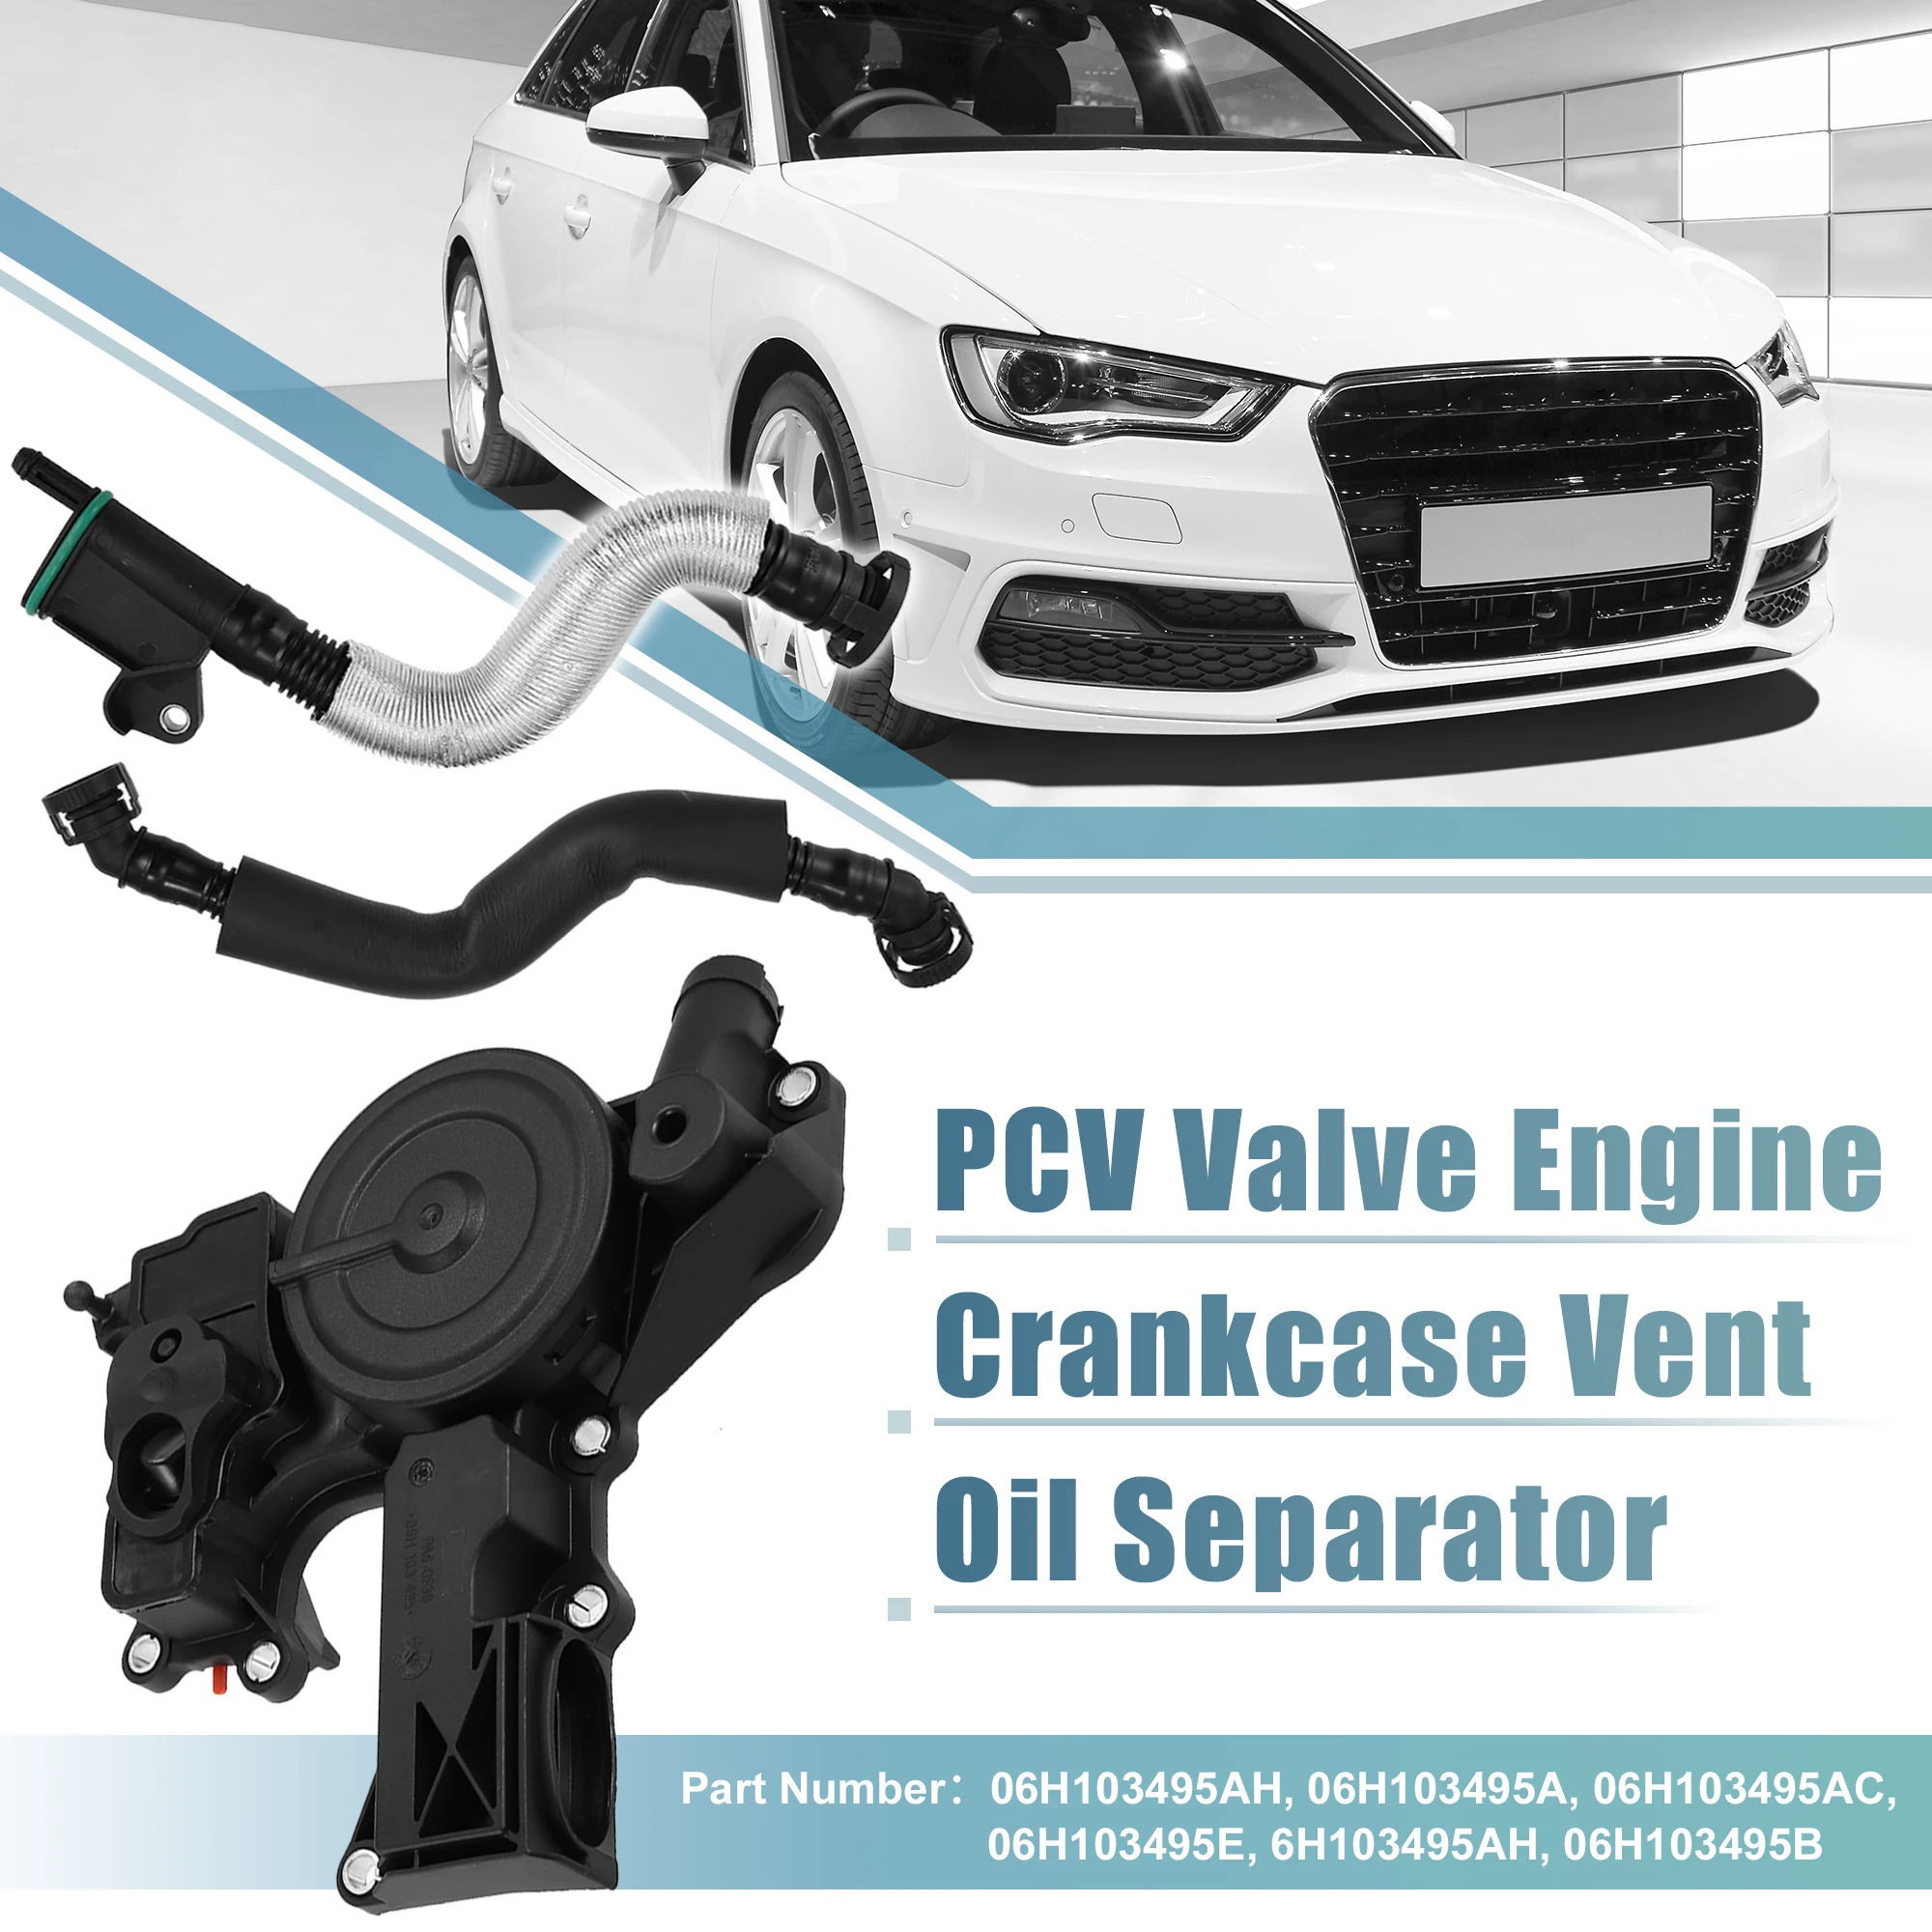 PCV Valve Oil Separator for VW Volkswagen Beetle CC EOS GTI Jetta Passat Tiguan Audi A3 A4 A5 A6 Q3 Q5 Replace# 06H-103-495-AH 